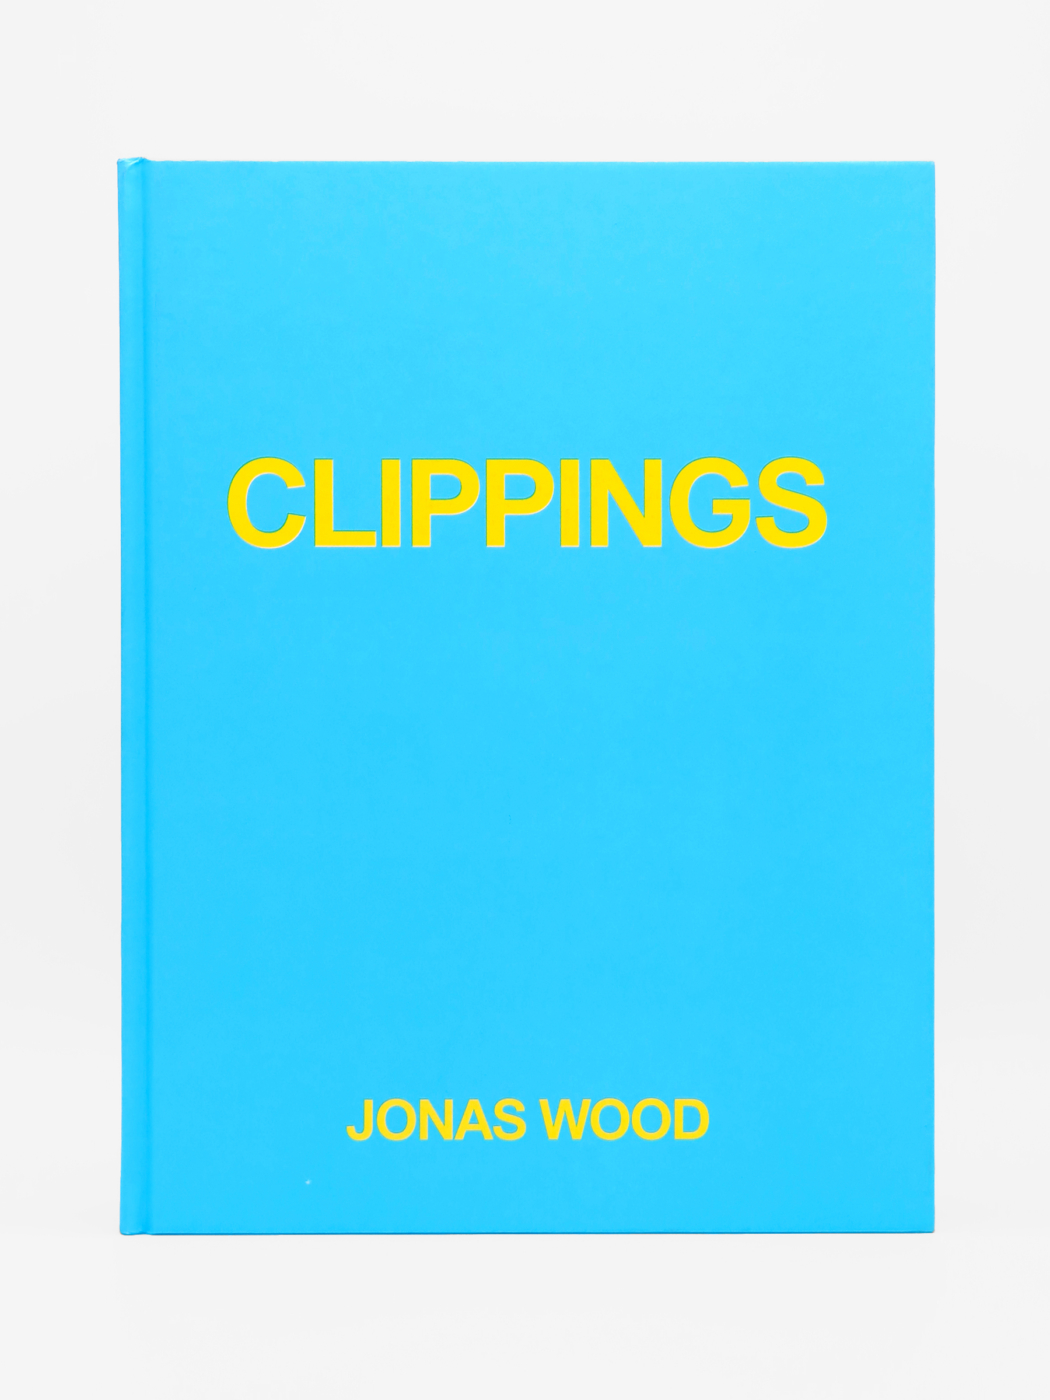 Jonas Wood, Clippings